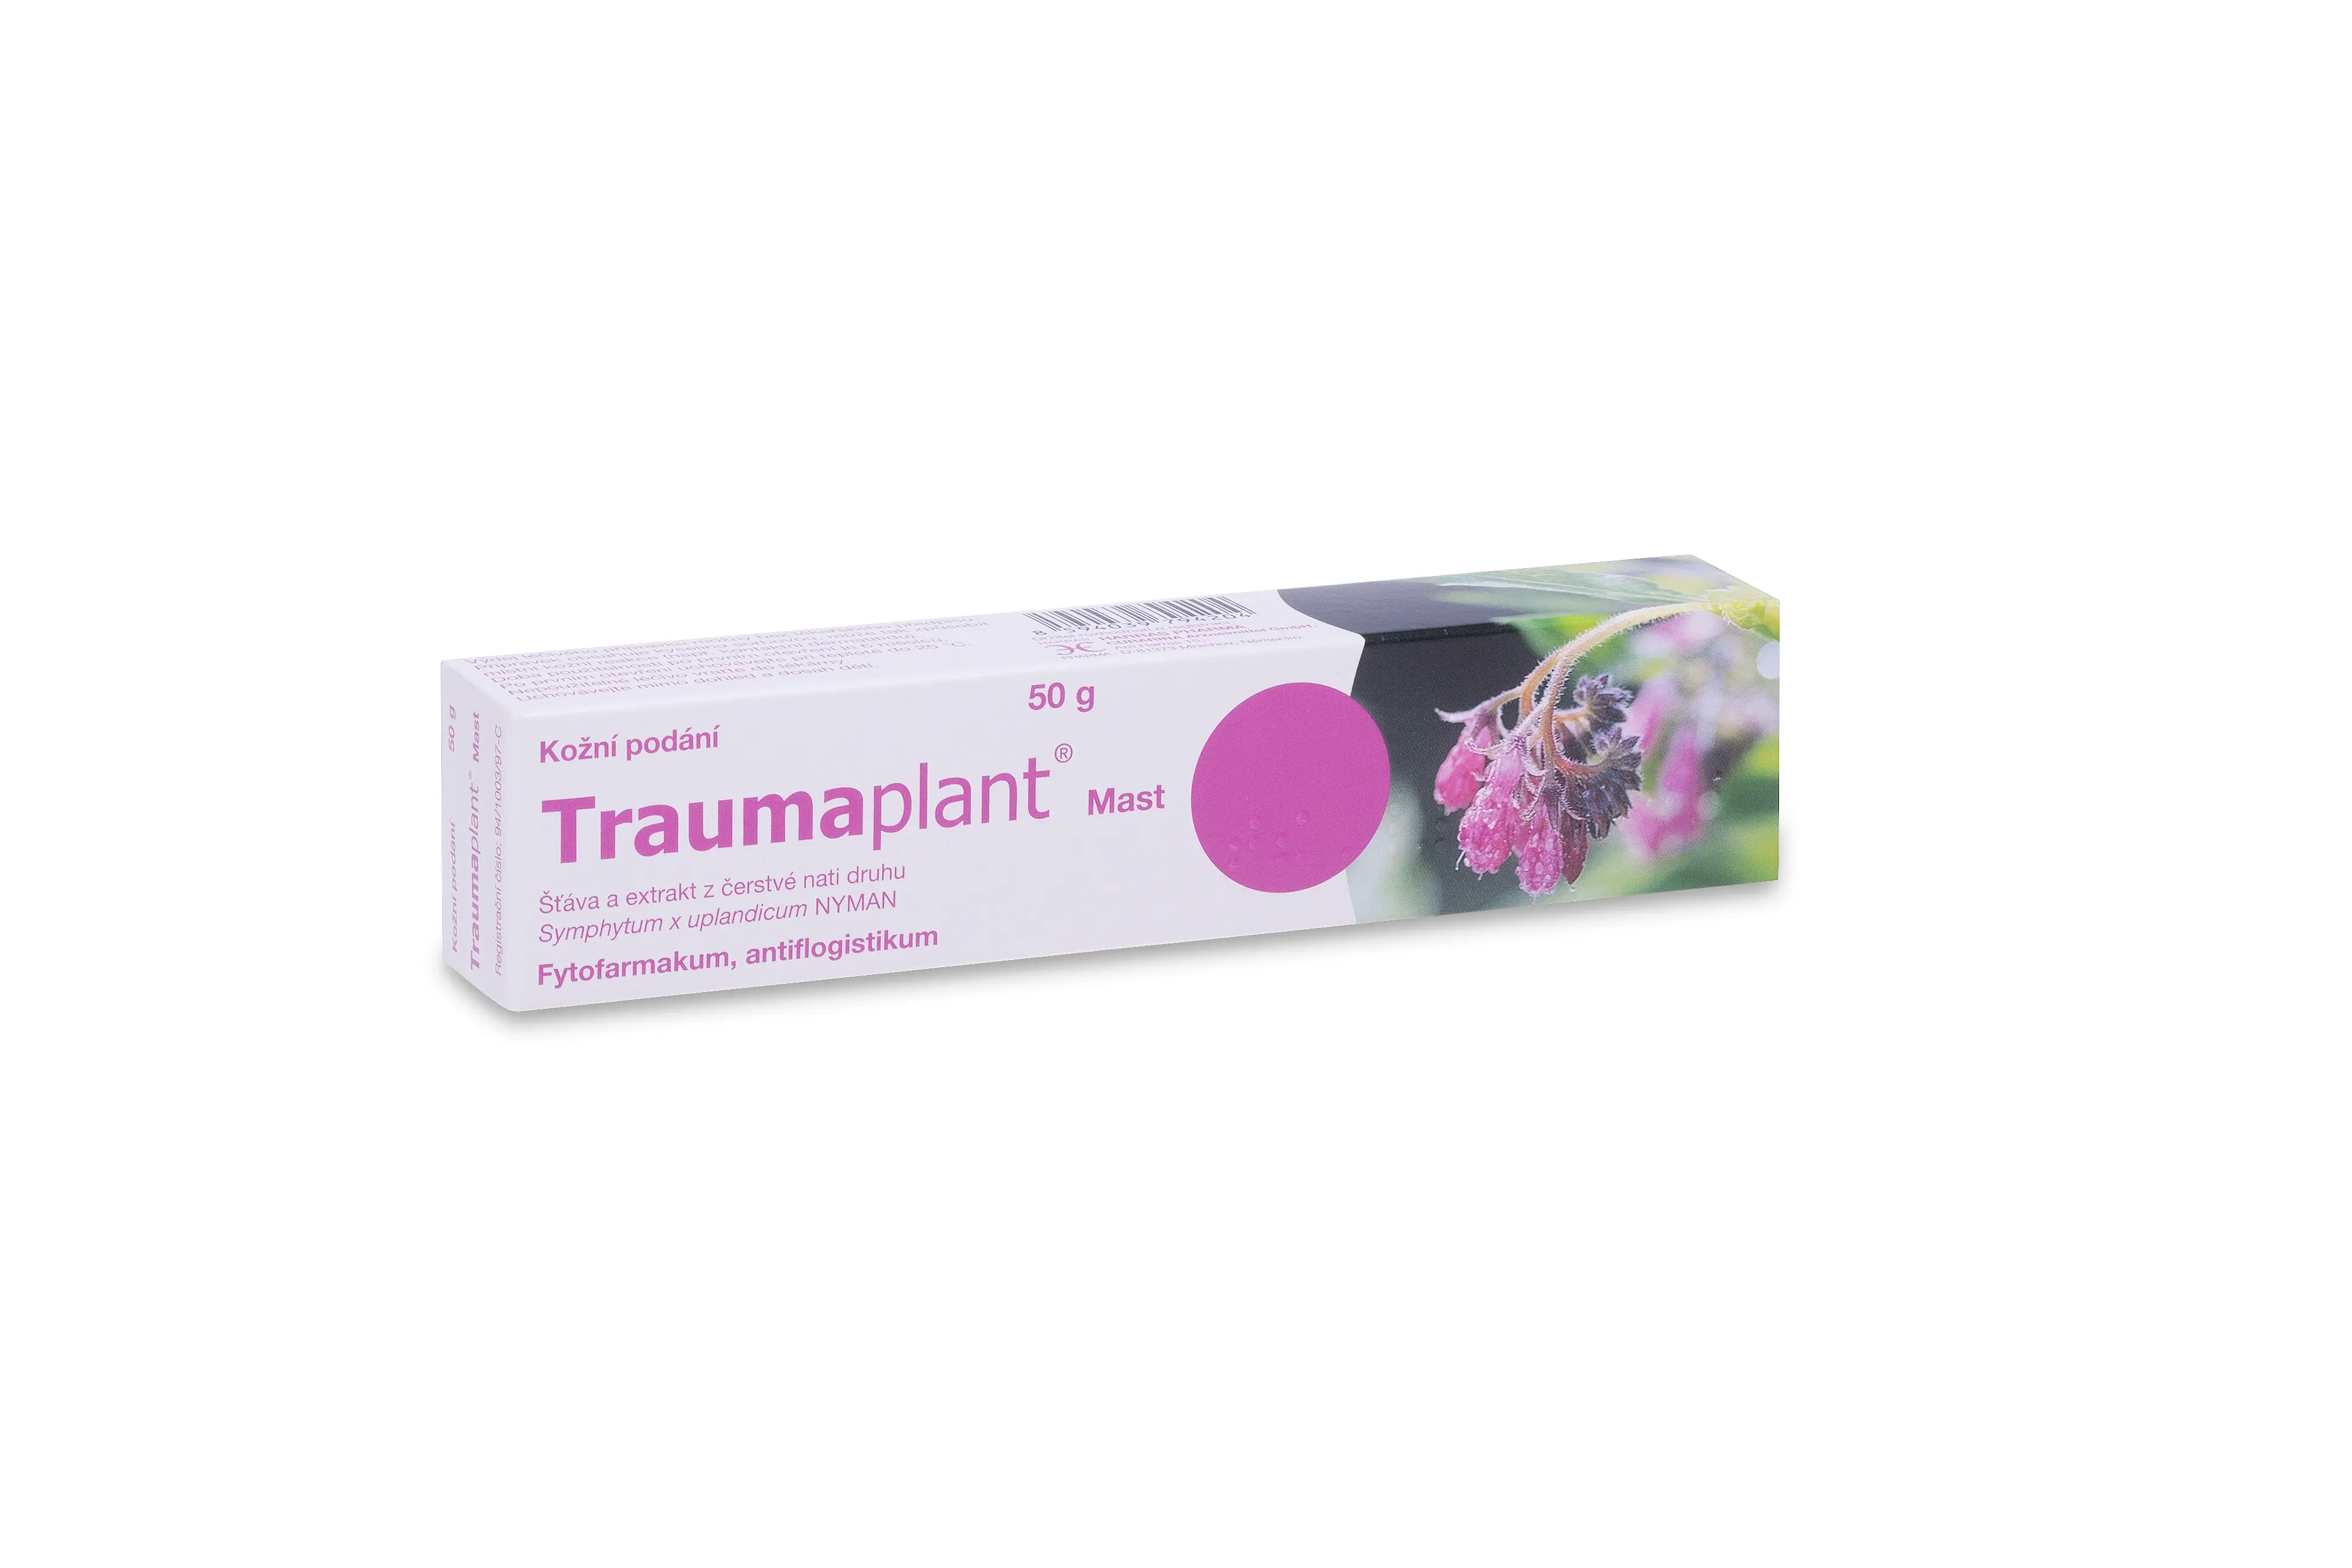 Traumaplant drm.ung. 1 x 50 g